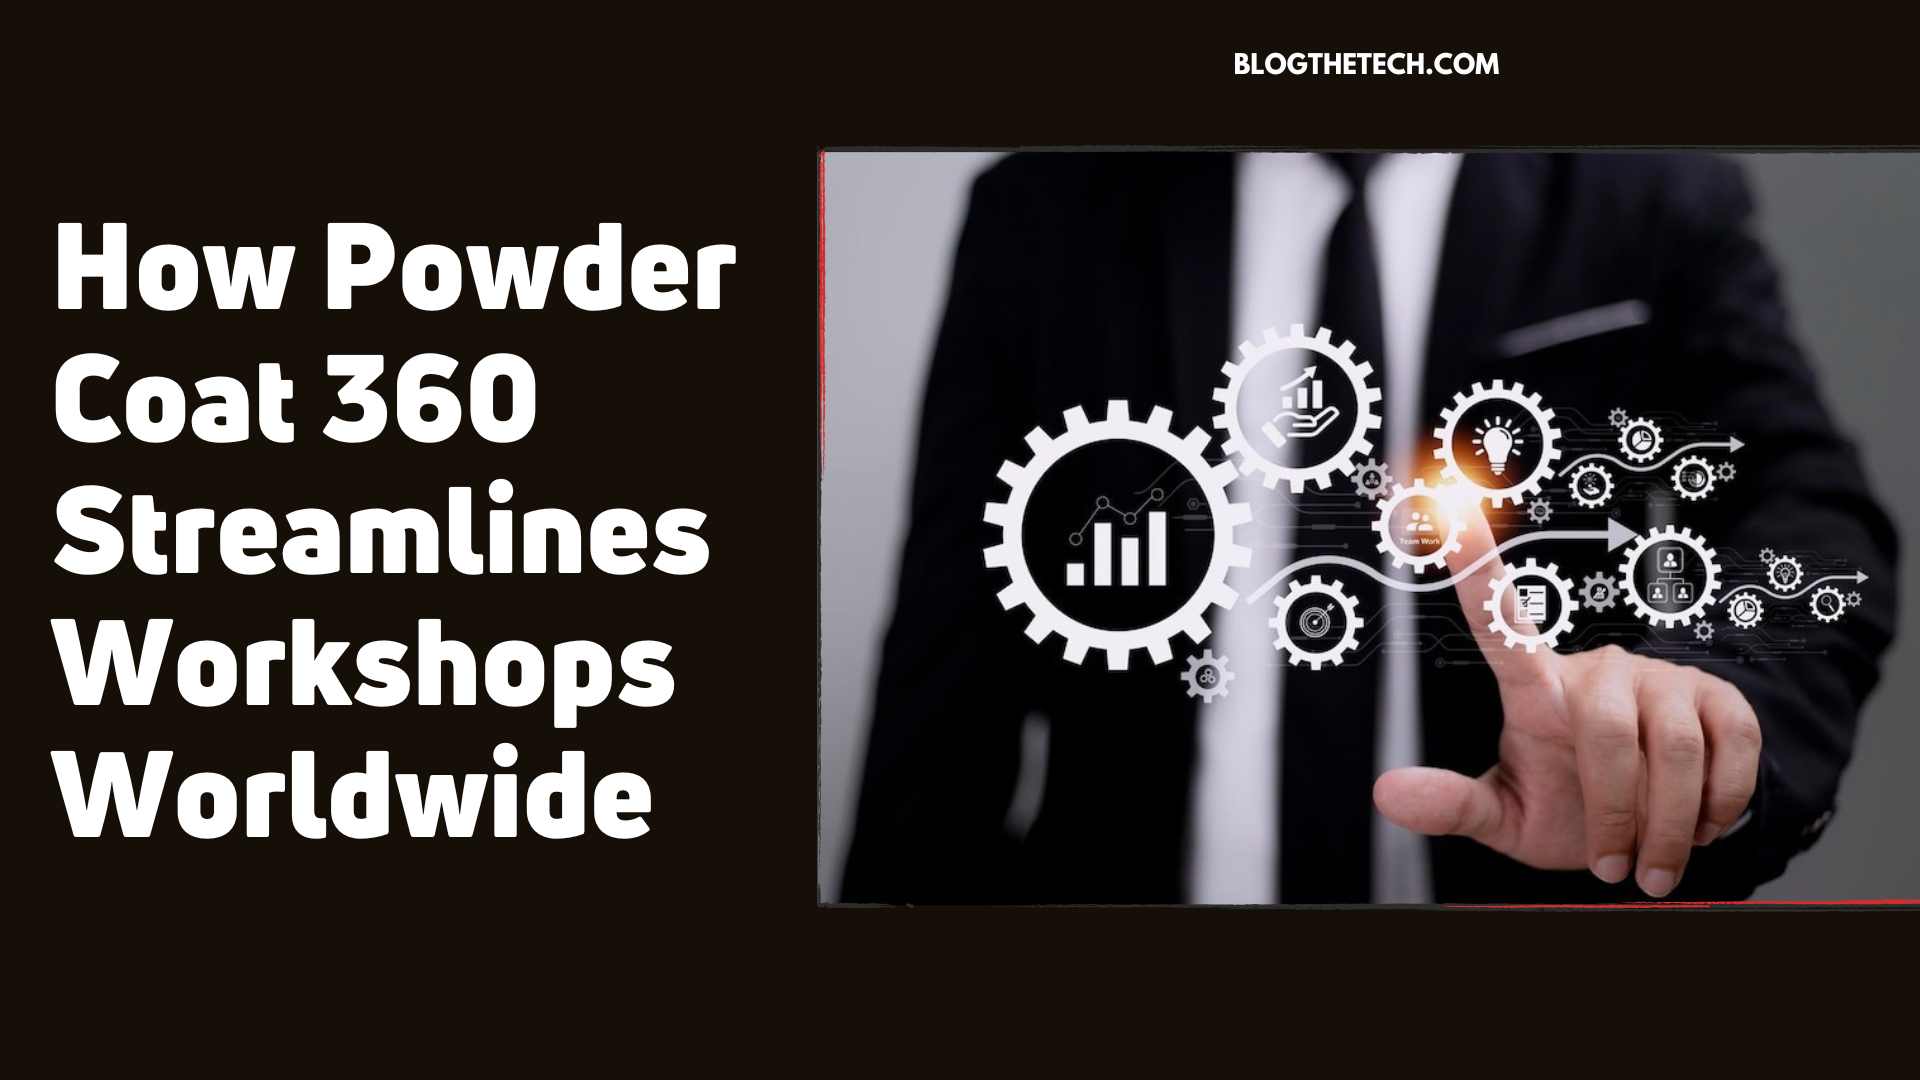 How Powder Coat 360 Streamlines Workshops Worldwide